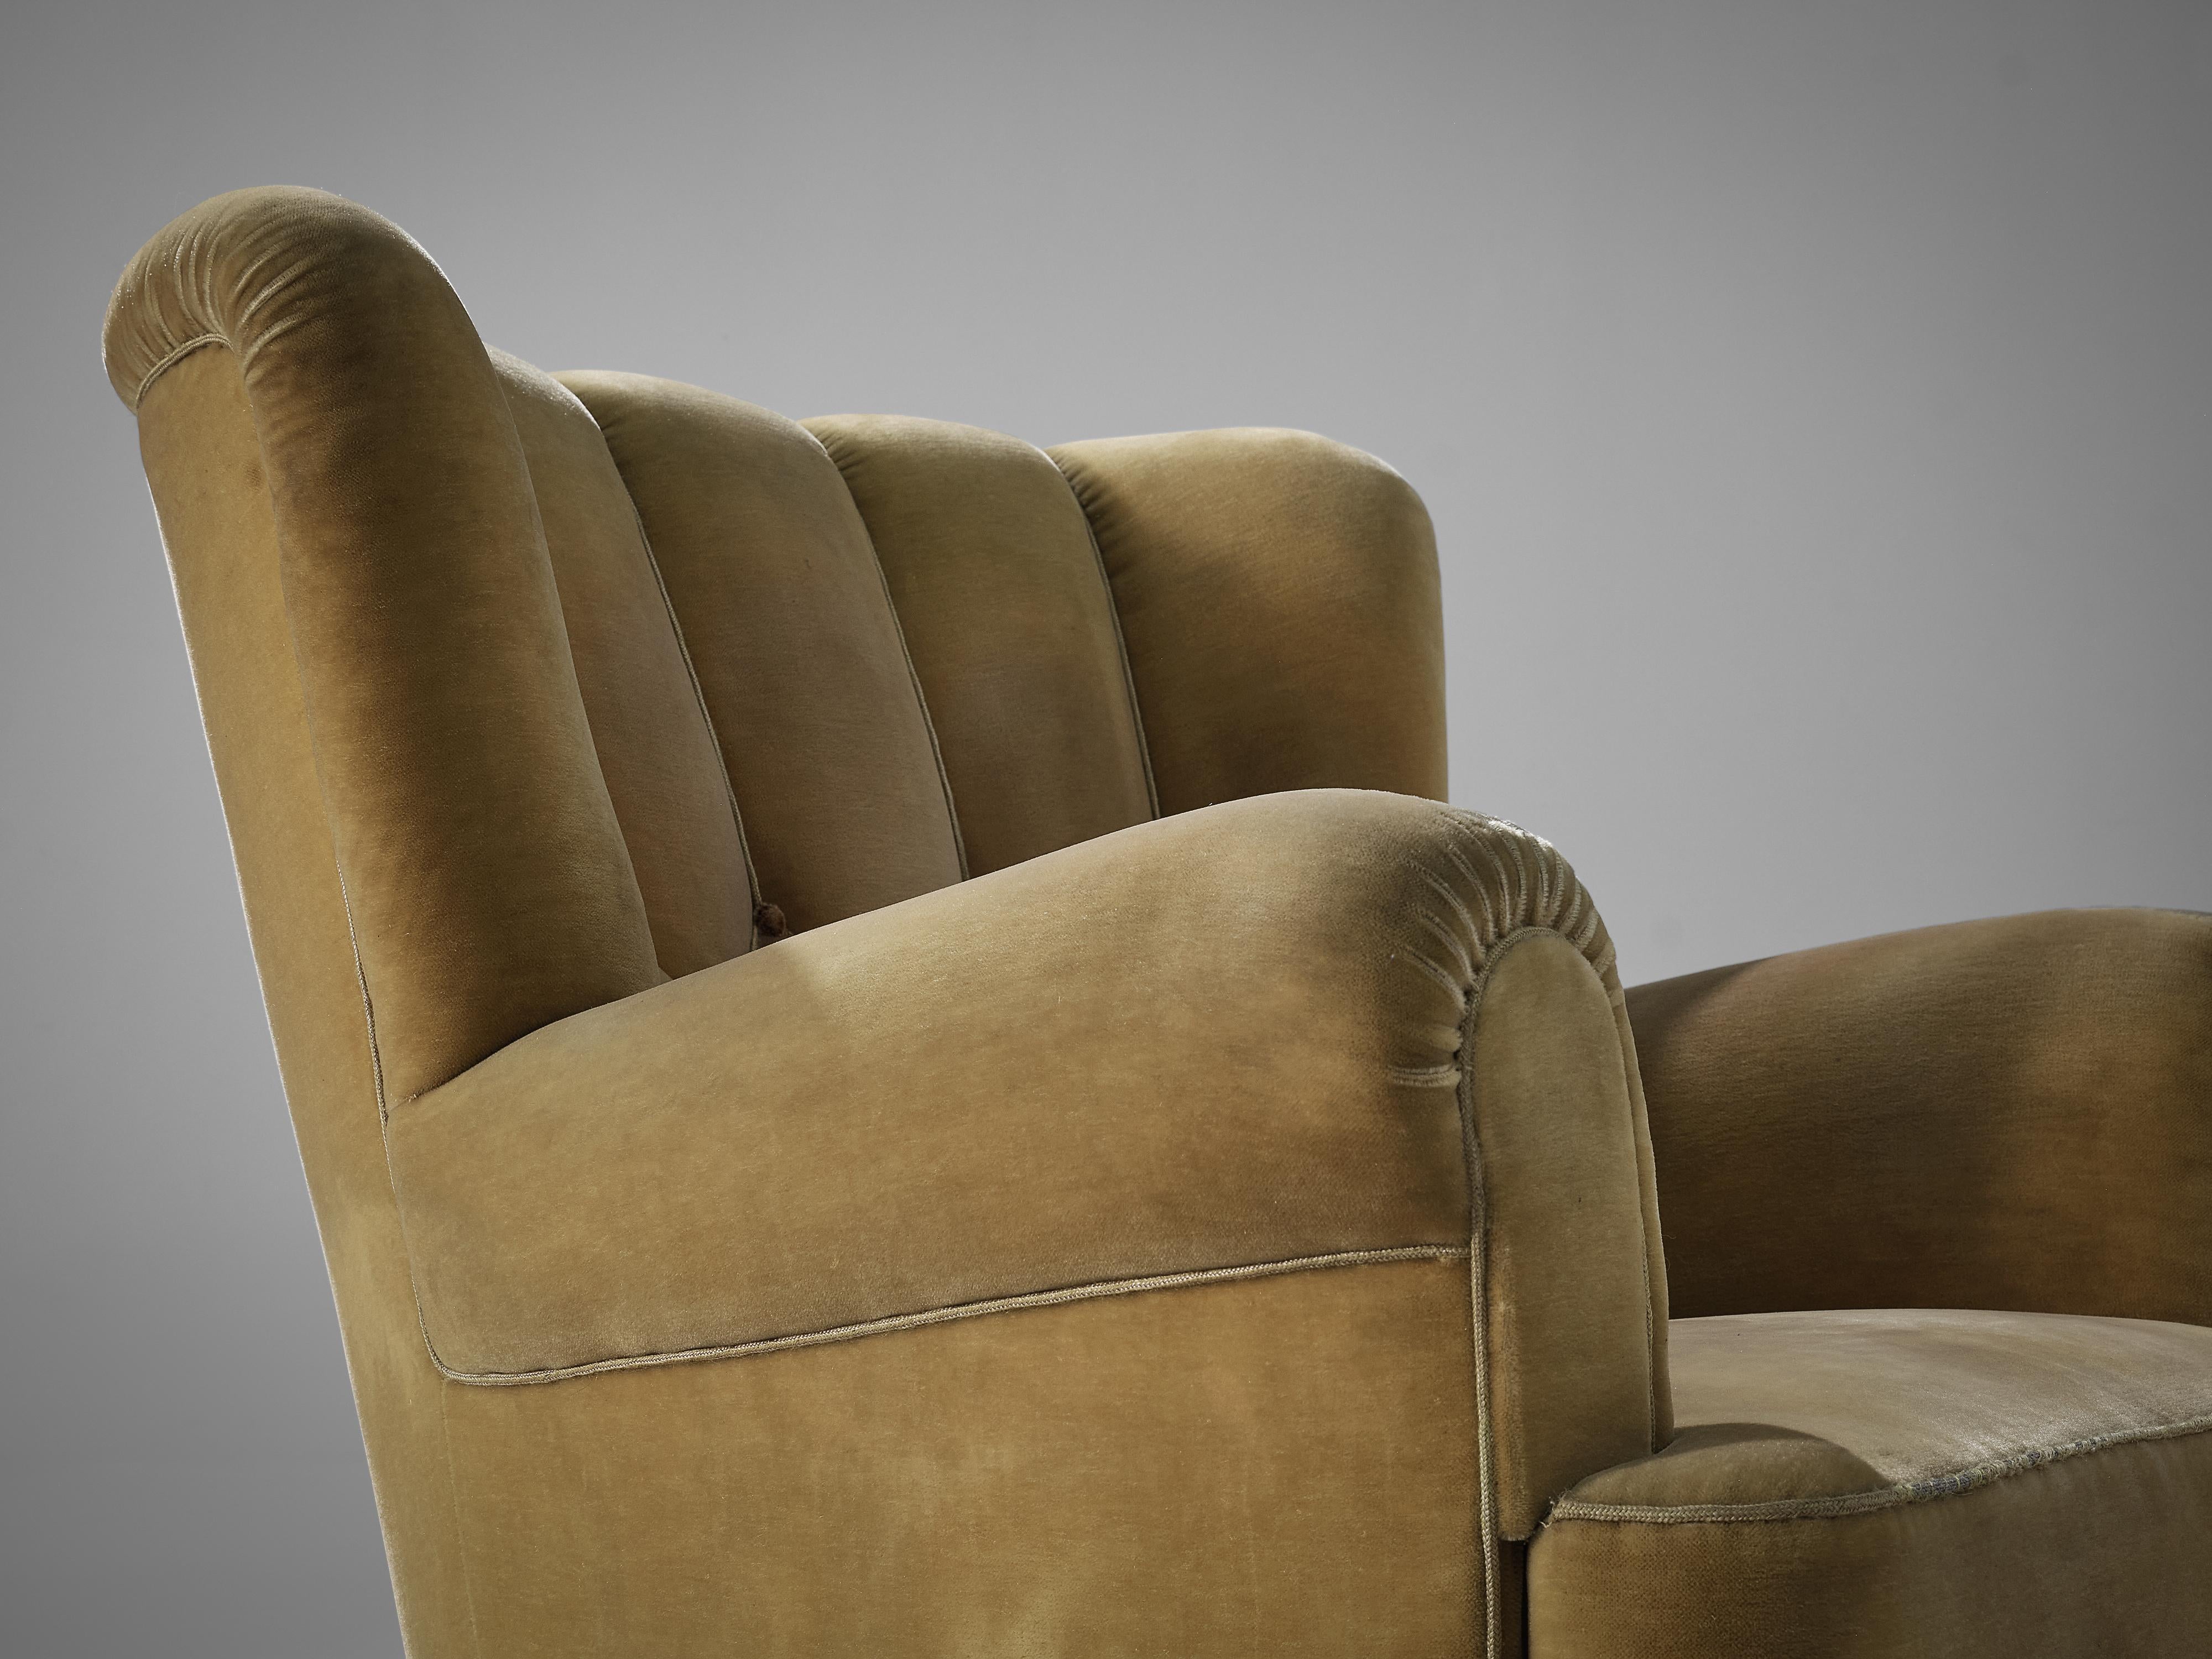 Bulky Danish Lounge Chair in Mustard Fabric